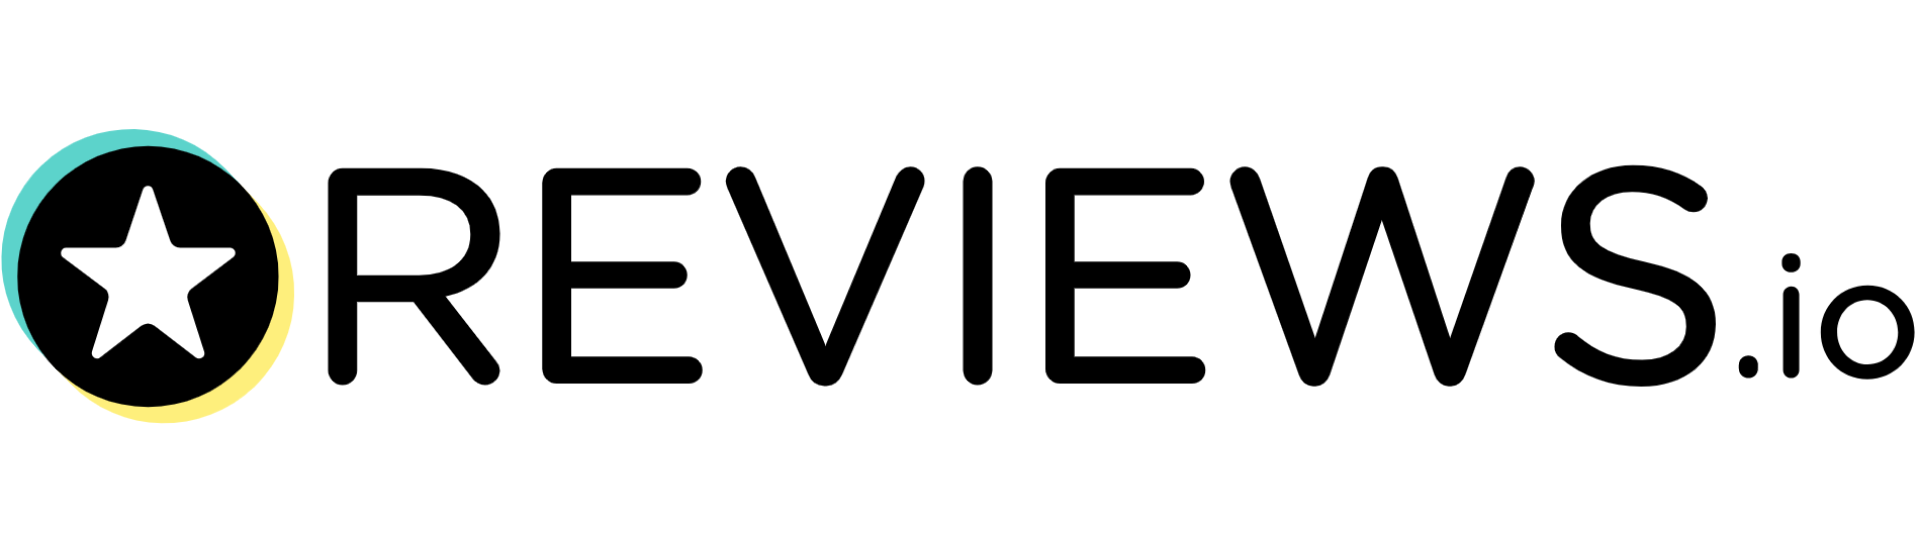 Review.io Logo